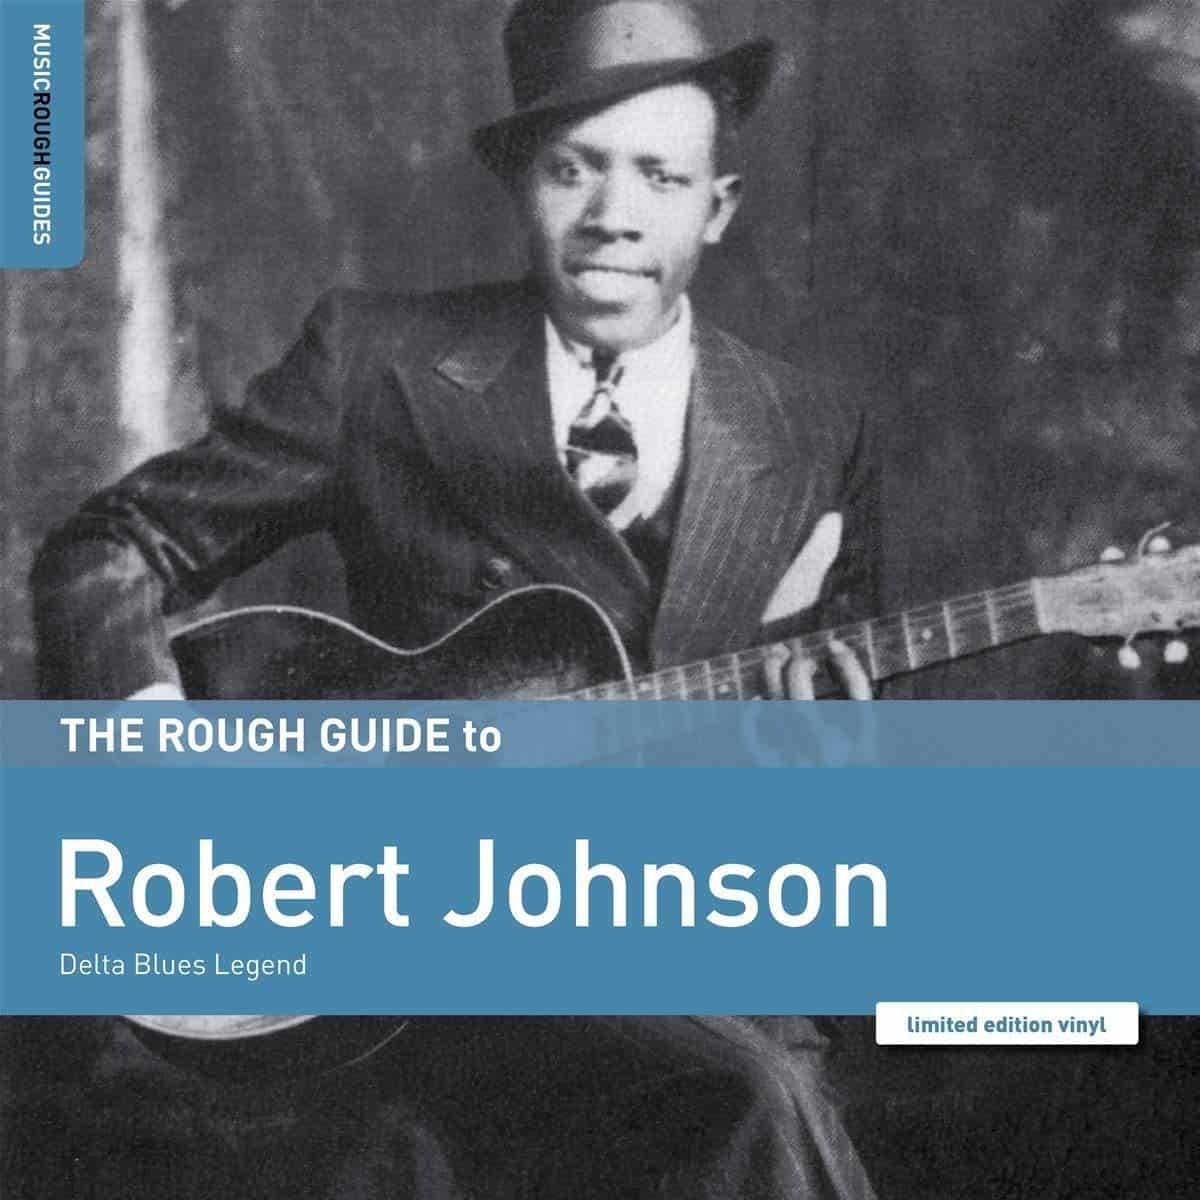 Robert-Johnson-Rough-Guide-vinyl-LP-record-album-front